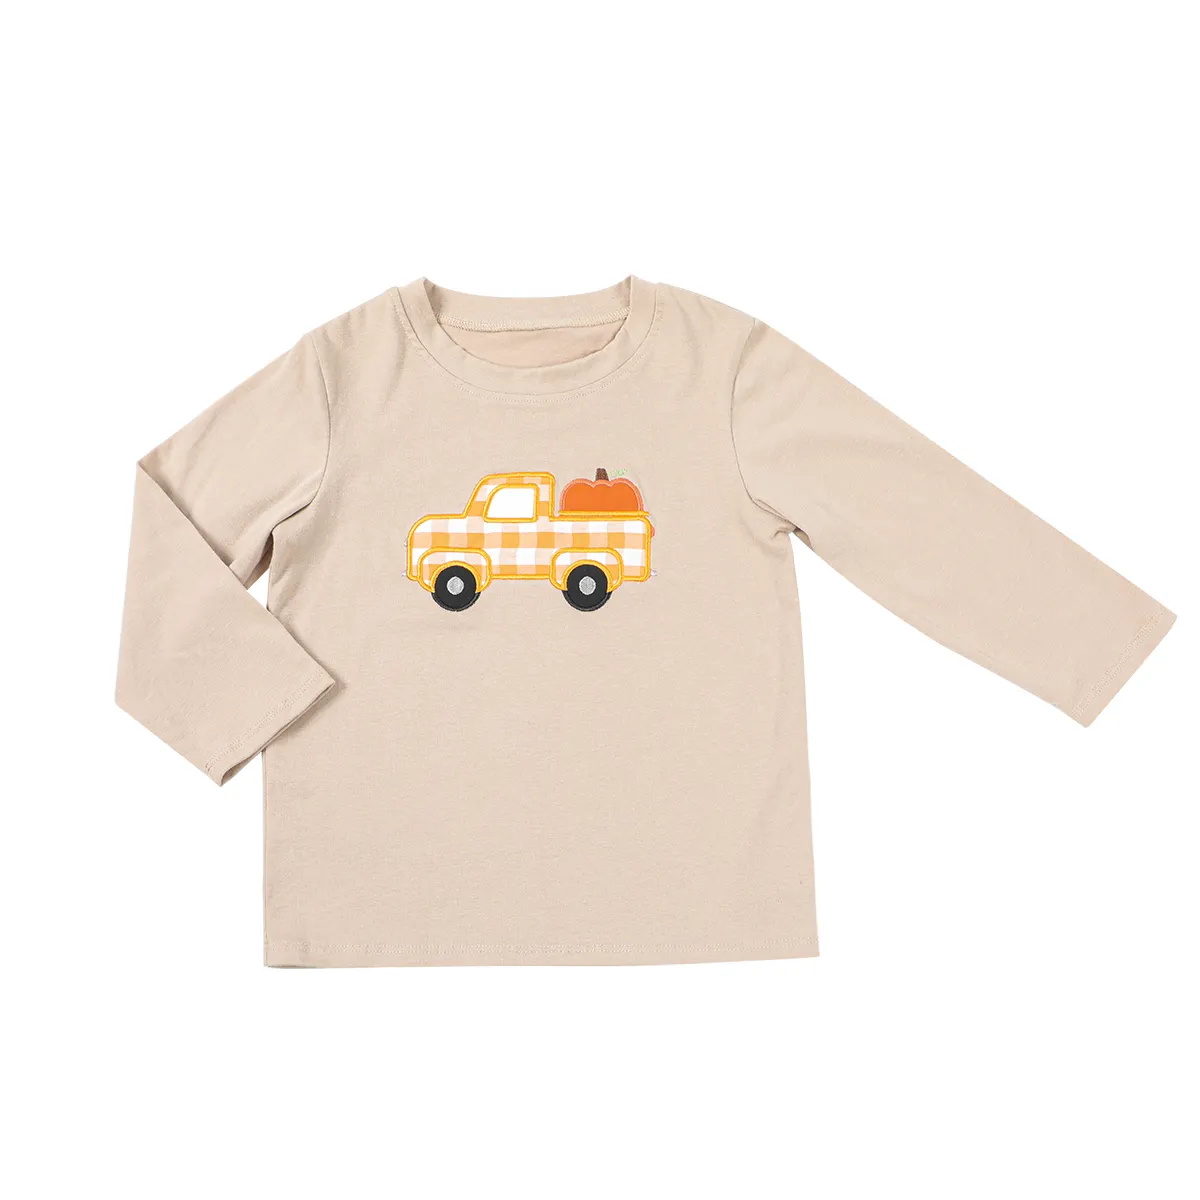 Puresun Casual pumpkin car applique print designer dresses new baby toddler boys clothing sets